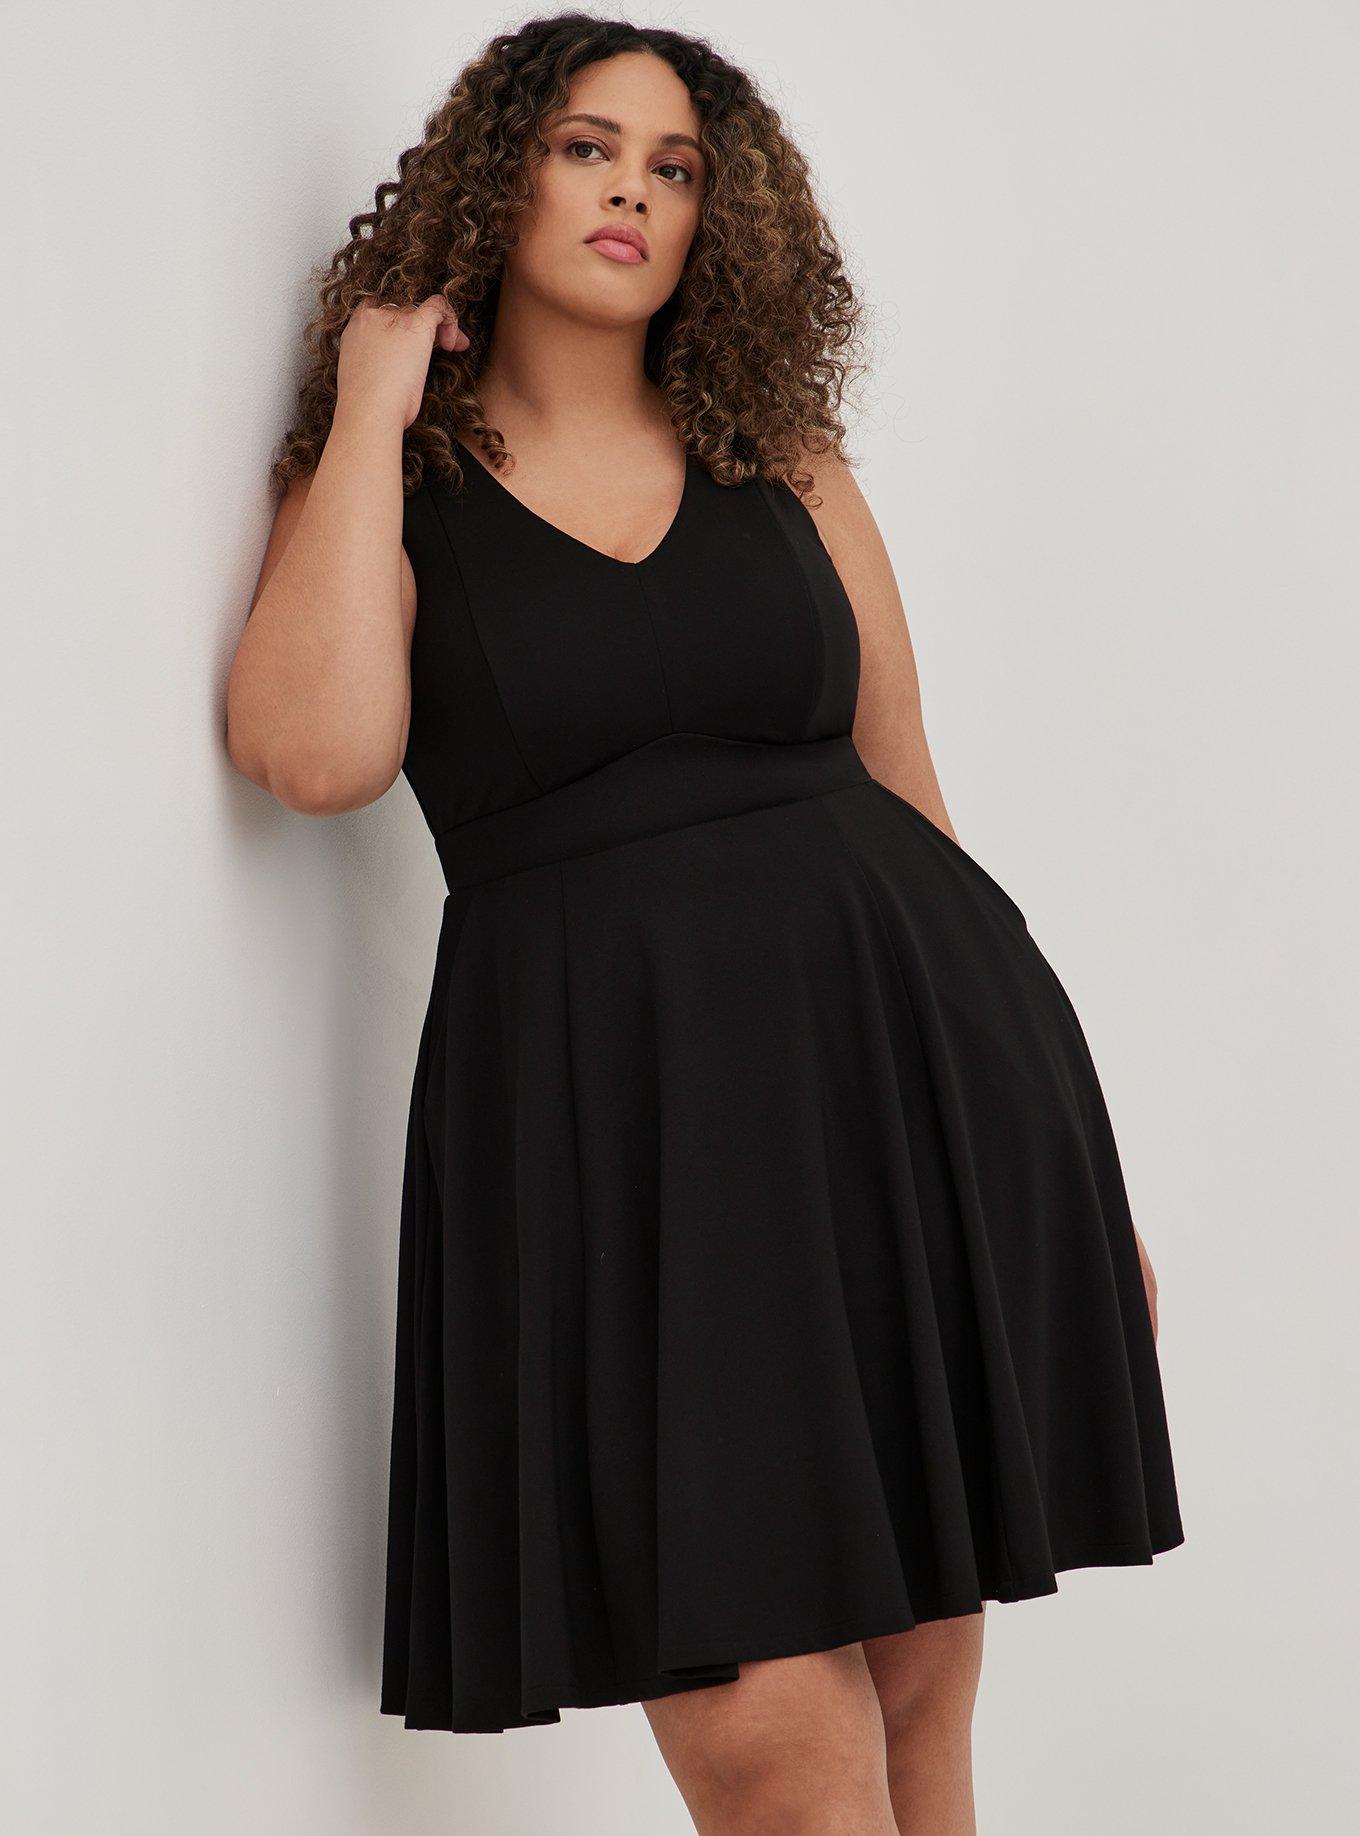 Plus Size - Contouring Fit & Flare Dress - Ponte Black - Torrid